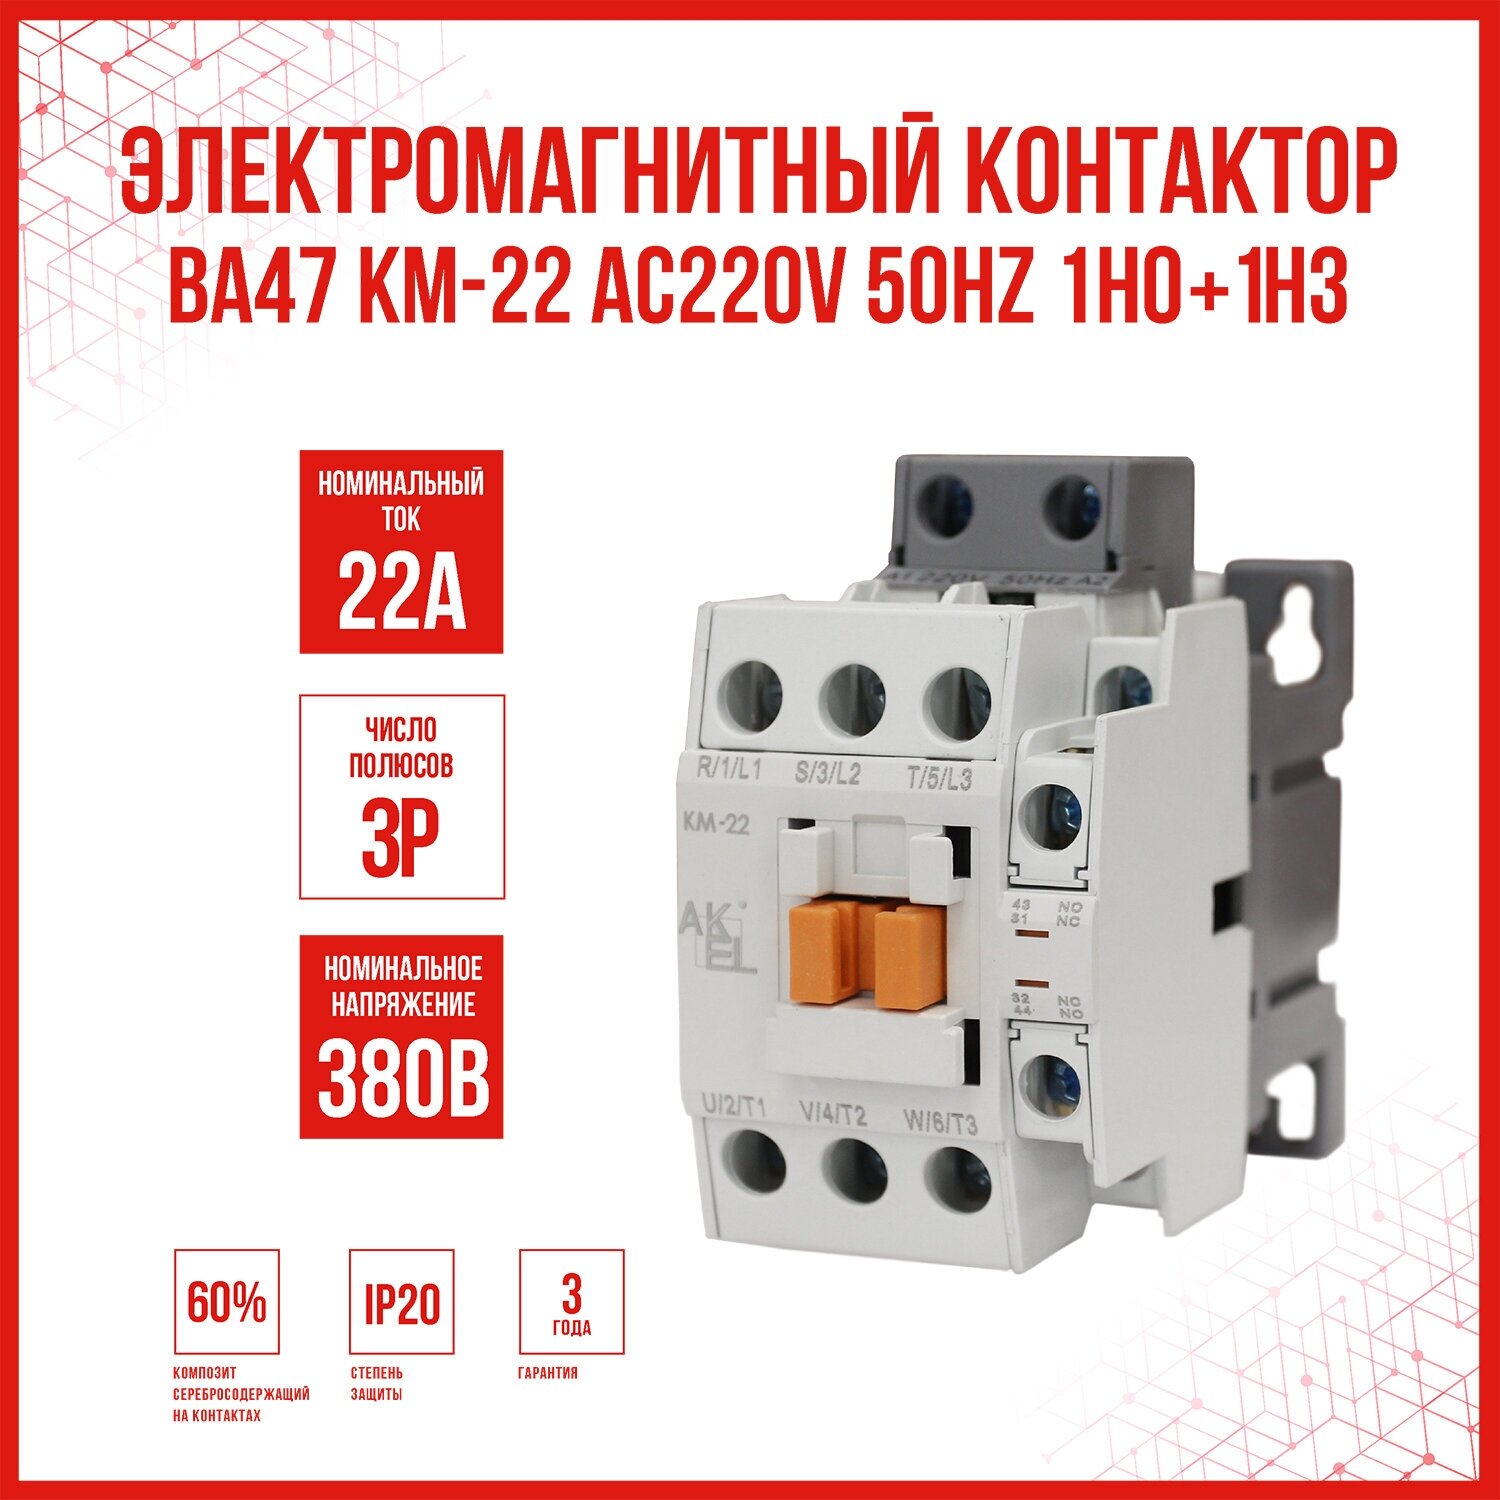 Контактор ВА47 KM-22 AC220V 50Hz 1НО+1НЗ, 1 шт.